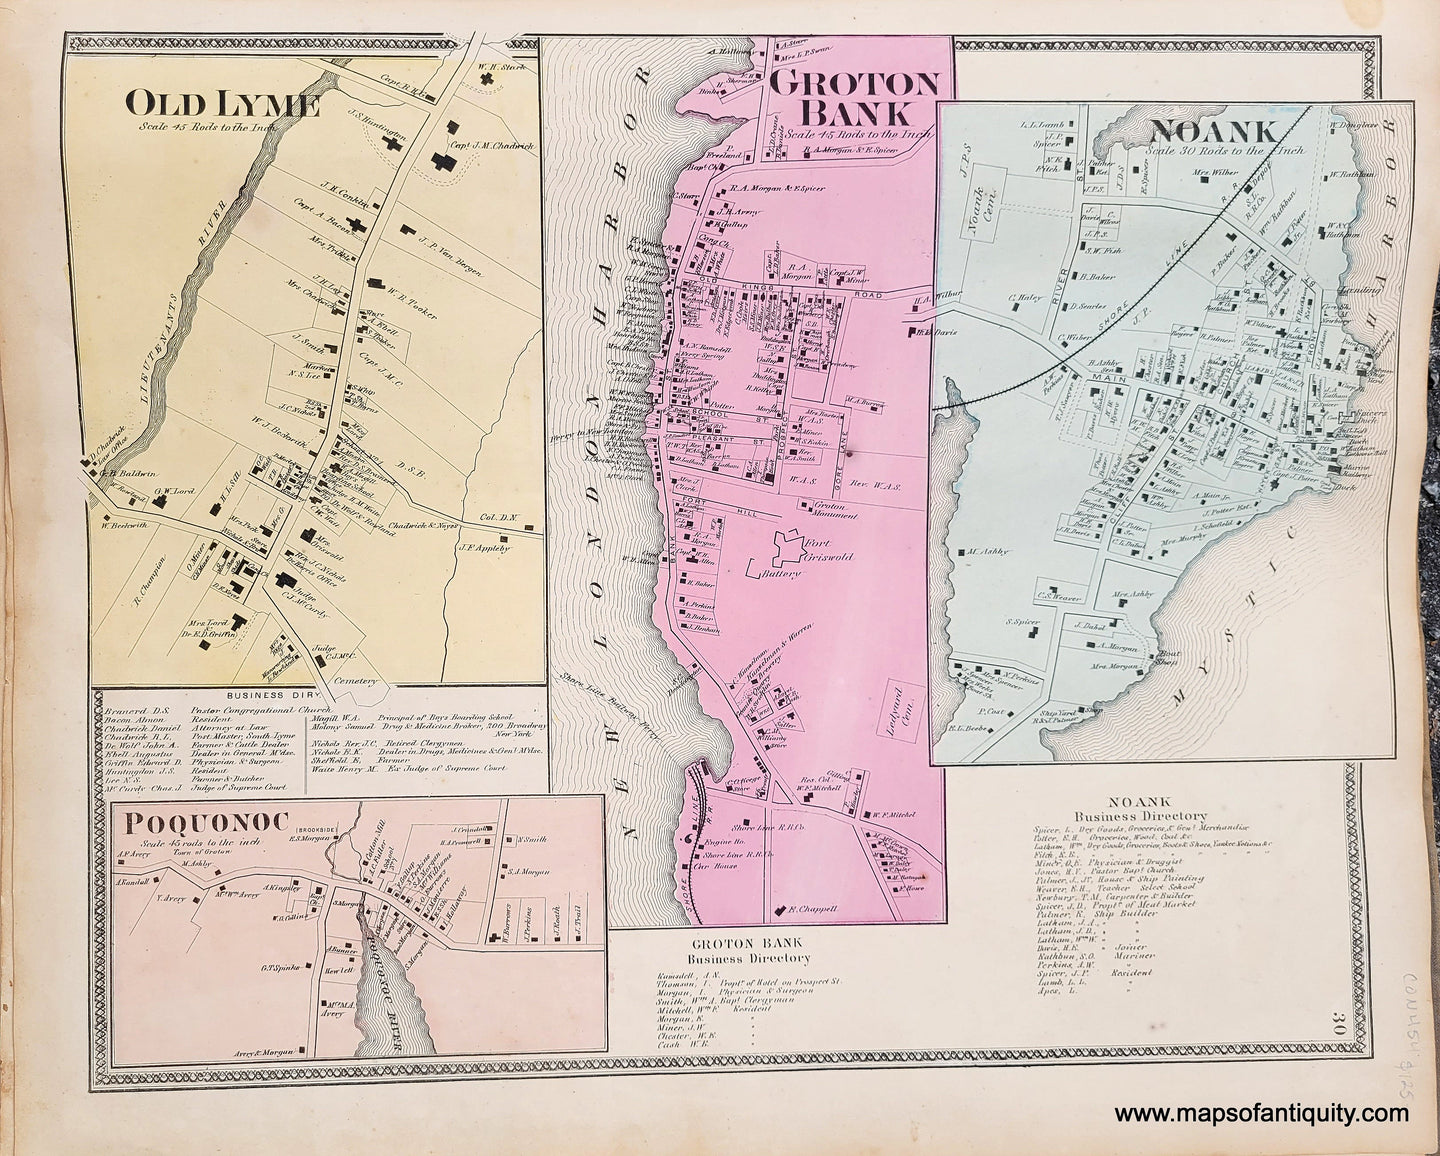 Genuine-Antique-Map-Old-Lyme-village-center--Poquonoc-Groton-Bank-Noank-CT--1868-Beers-Ellis-Soule-Maps-Of-Antiquity